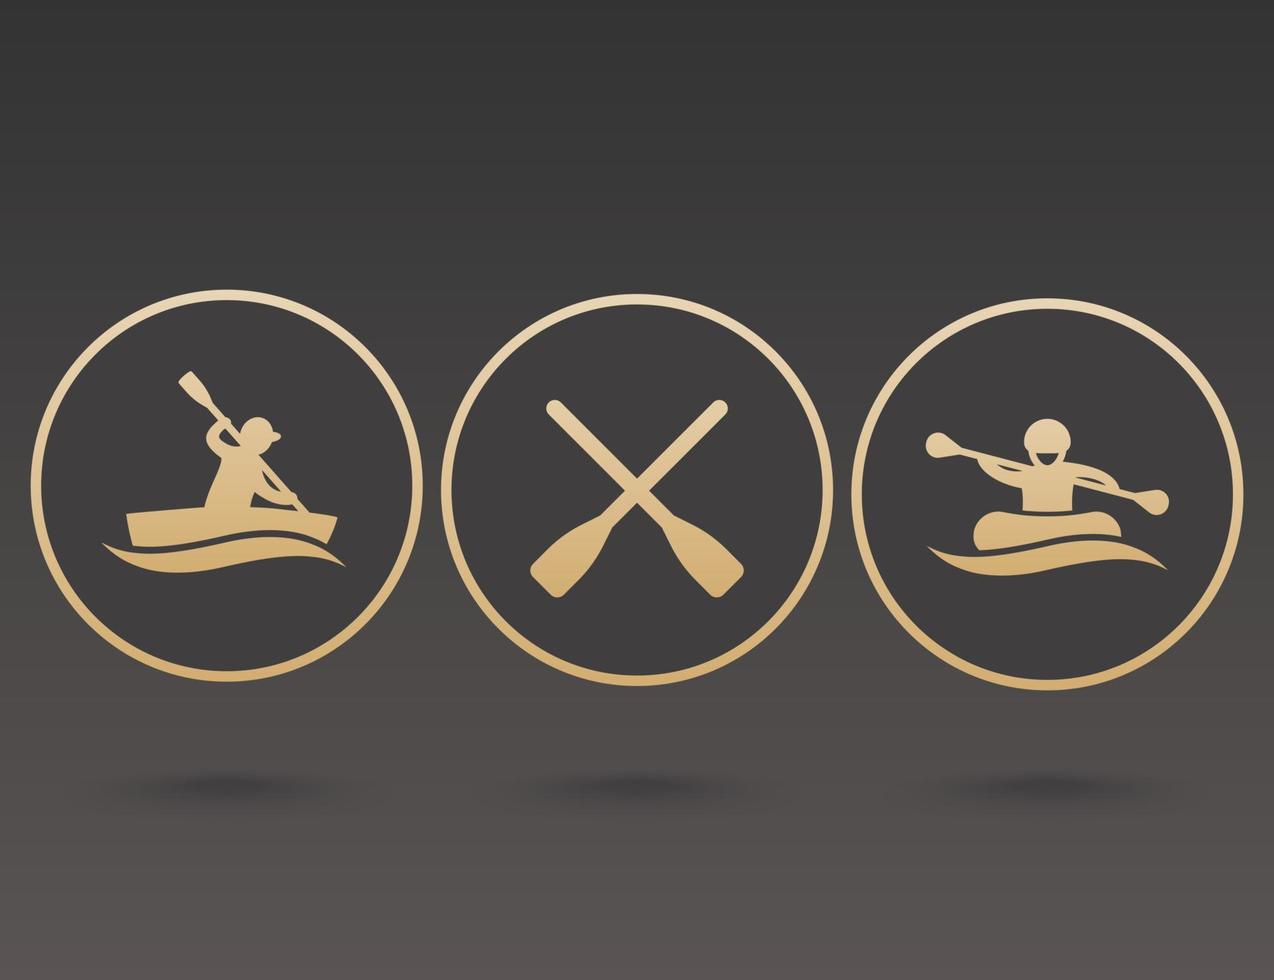 Rowing, kayaking, rafting, canoe, boat, paddle, oars icons vector